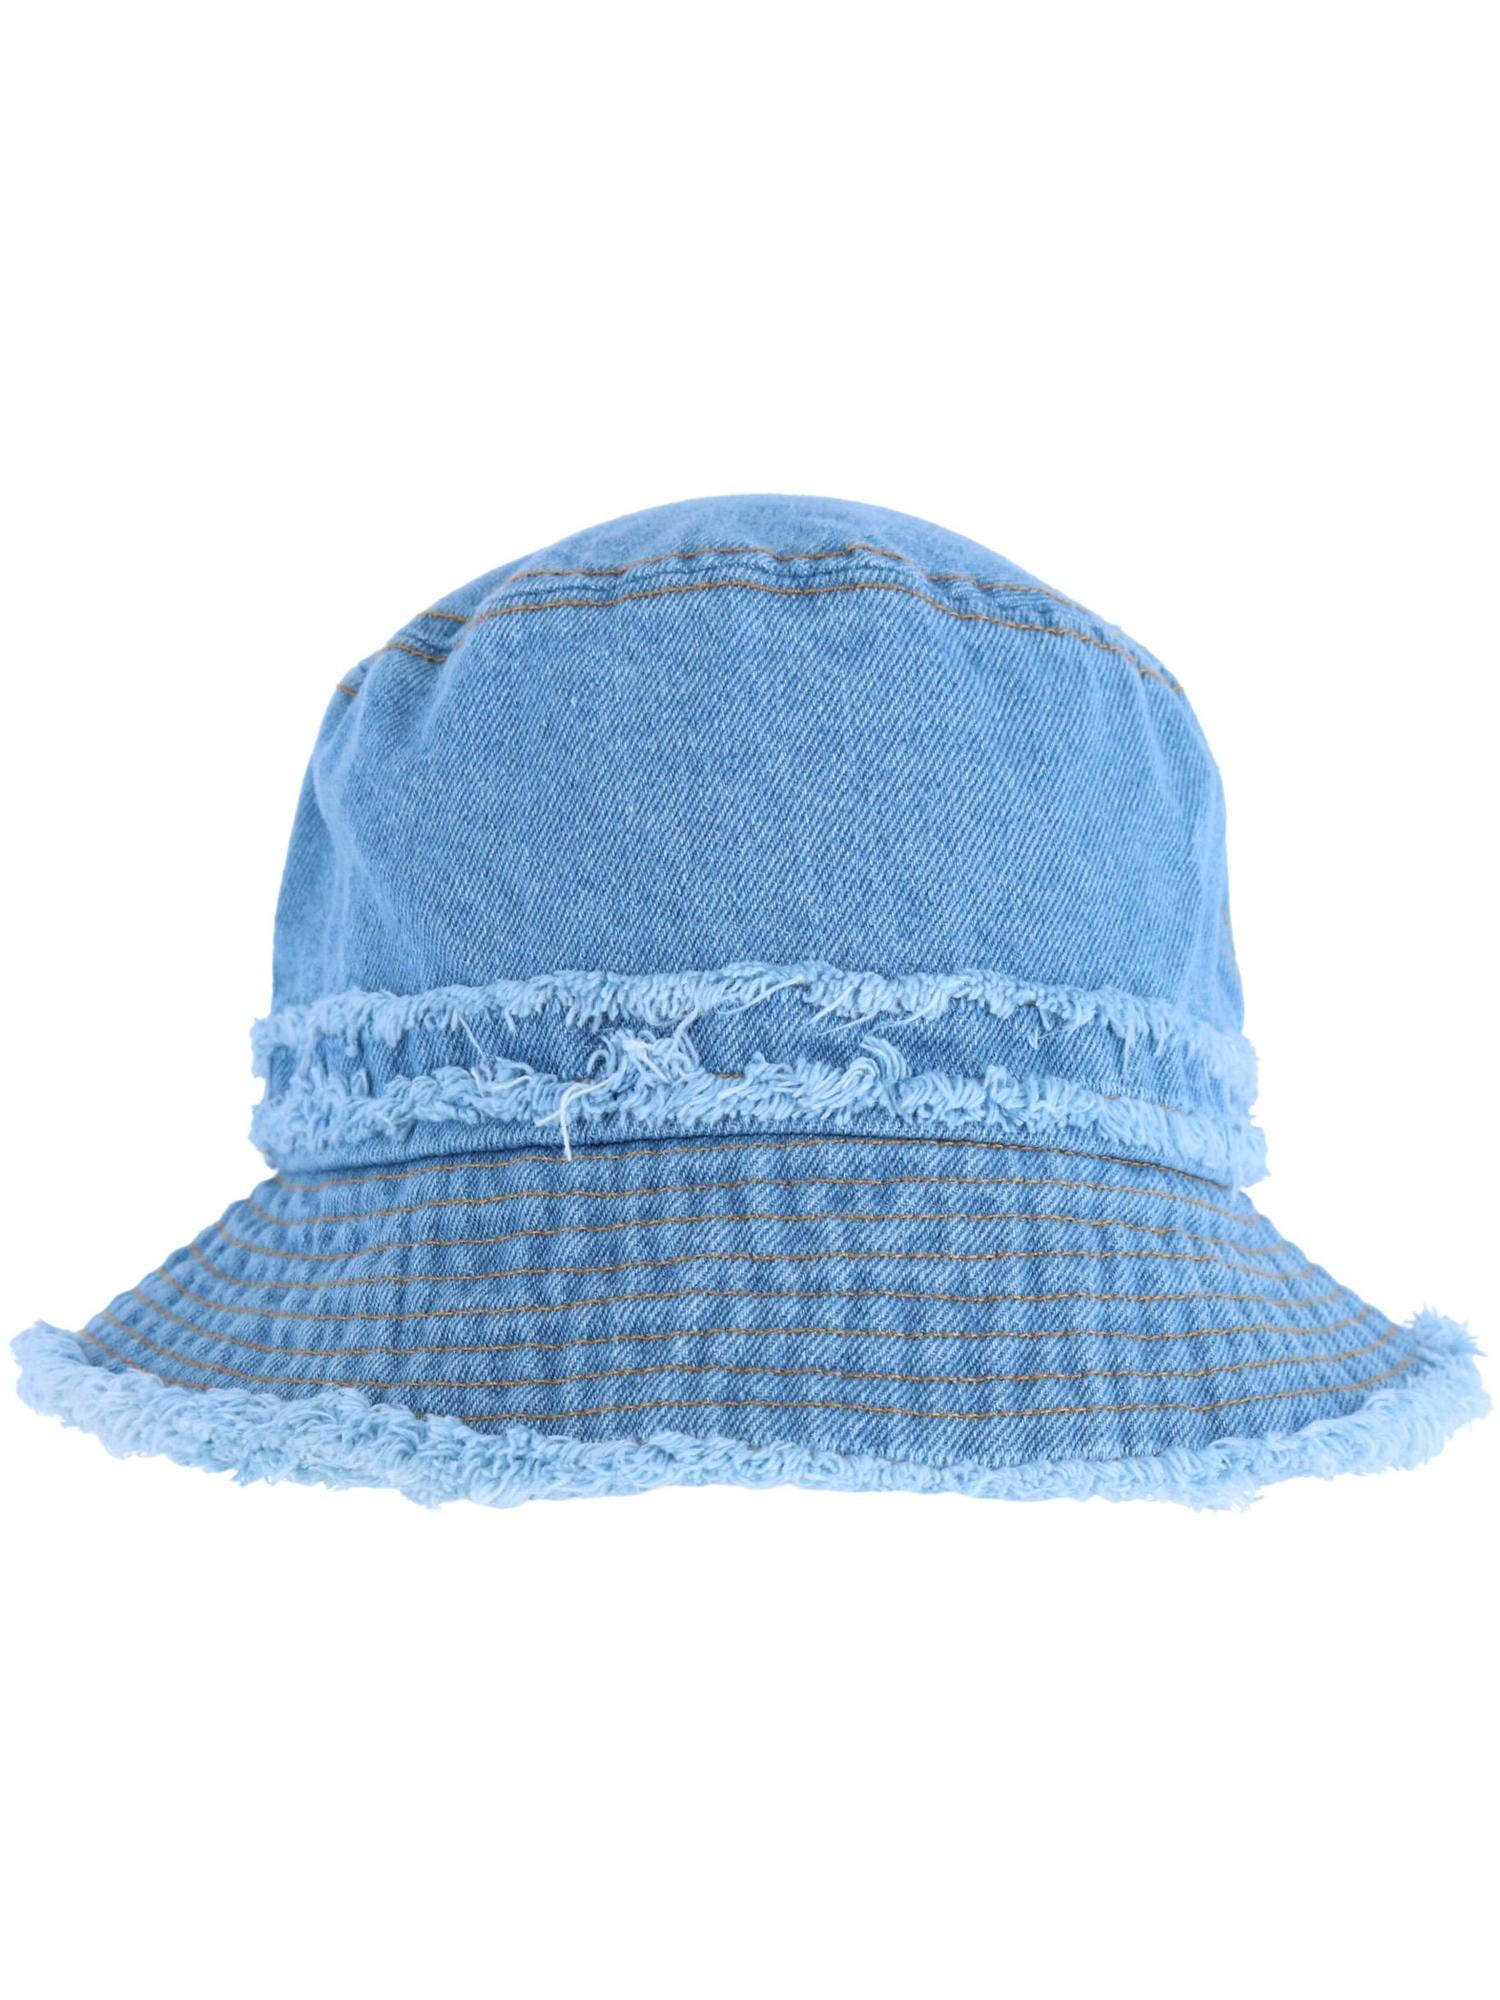 Western Cowboy Hat With String Sun Protection Bucket Hat Men Women Beach  Sun-Hat | eBay